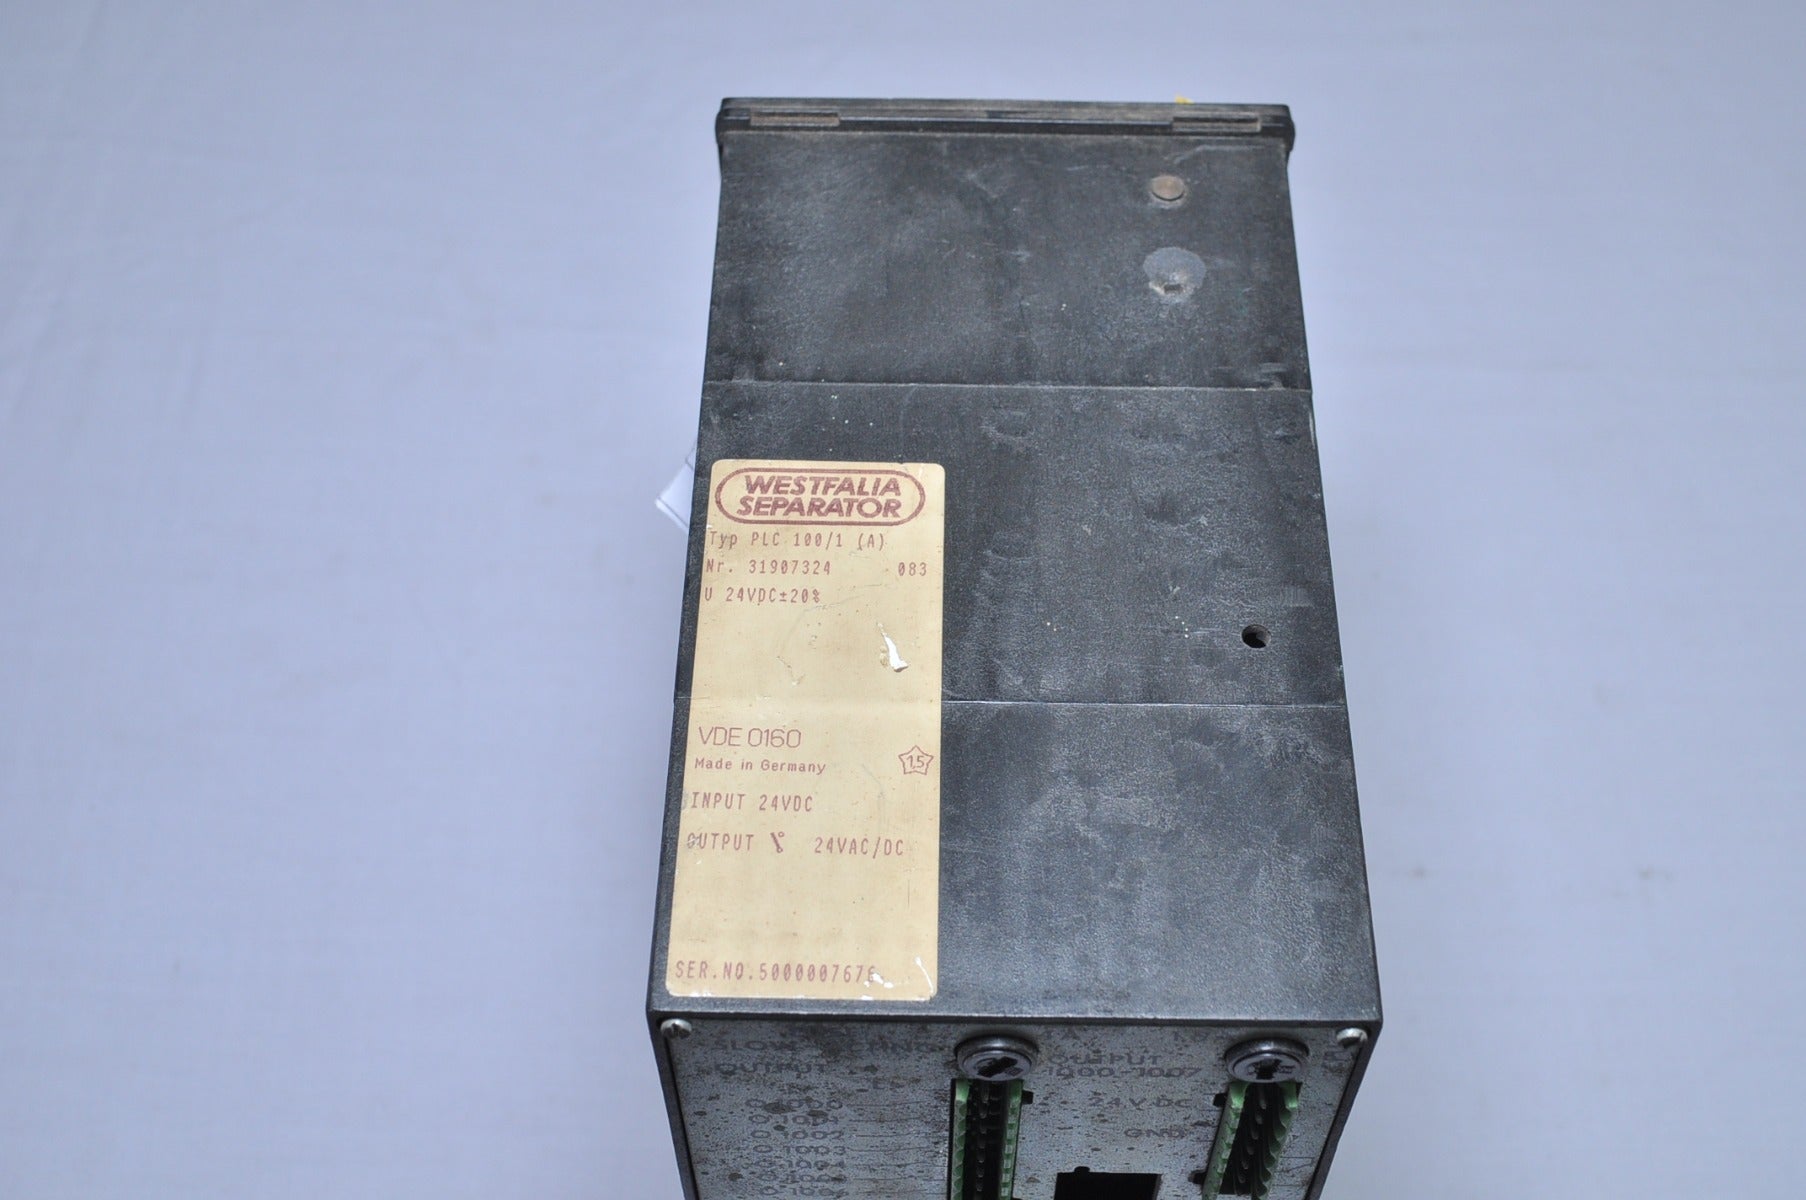 Westfalia separator plc 100/1(a) control unit